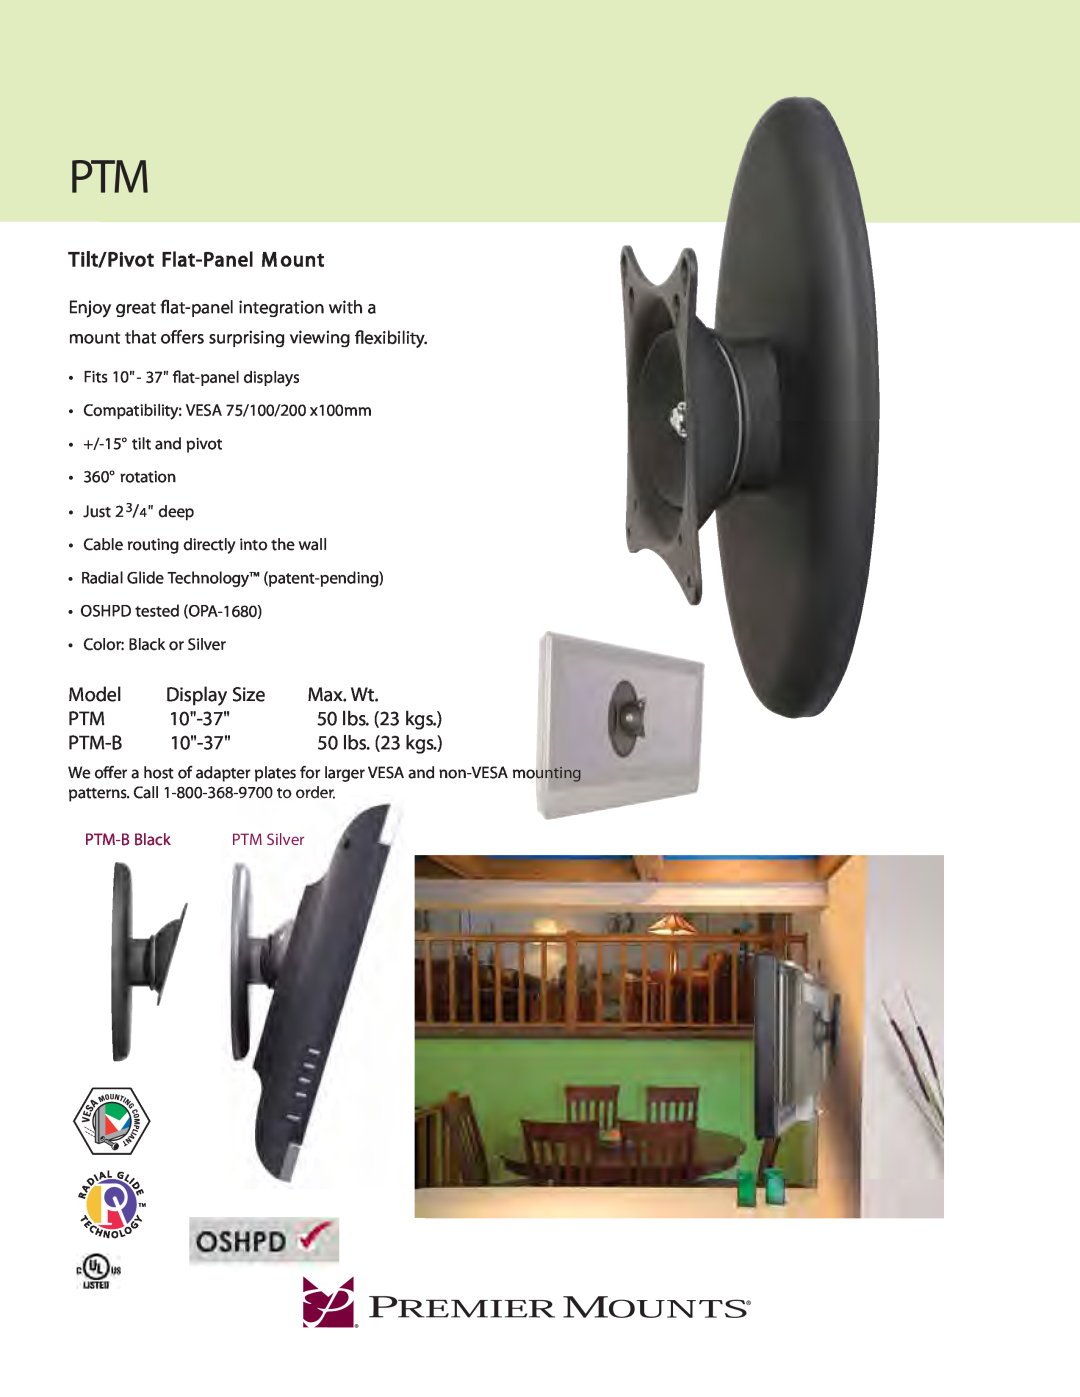 Premier Mounts PTM-B manual Tilt/Pivot Flat-PanelM ount, Model, Display Size, Max. Wt, 10-37, 50 lbs. 23 kgs, Ptm-B 